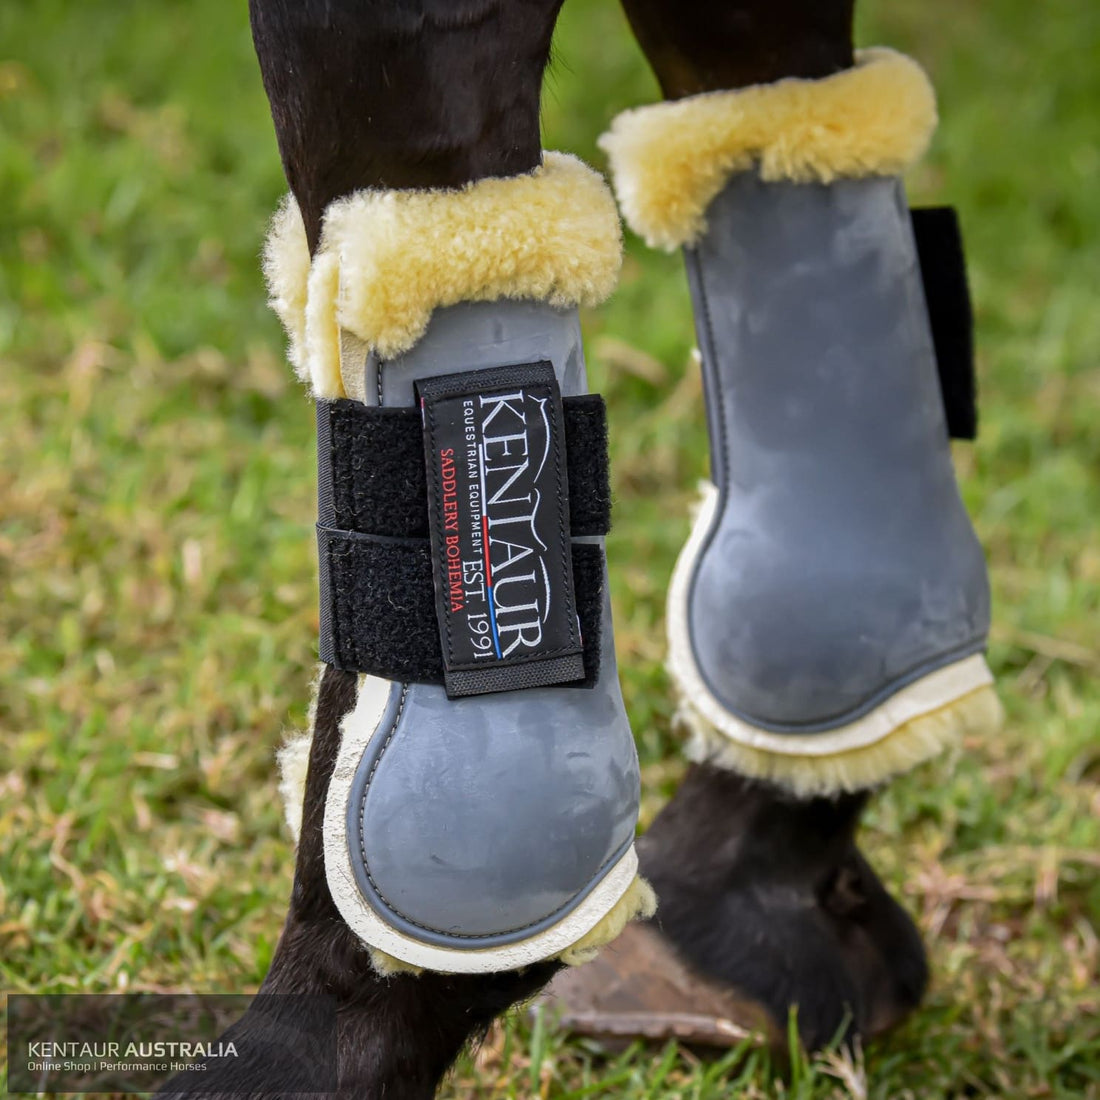 Kentaur ‘Profi’ Front Jumping Boots with Sheepskin Jumping Boots